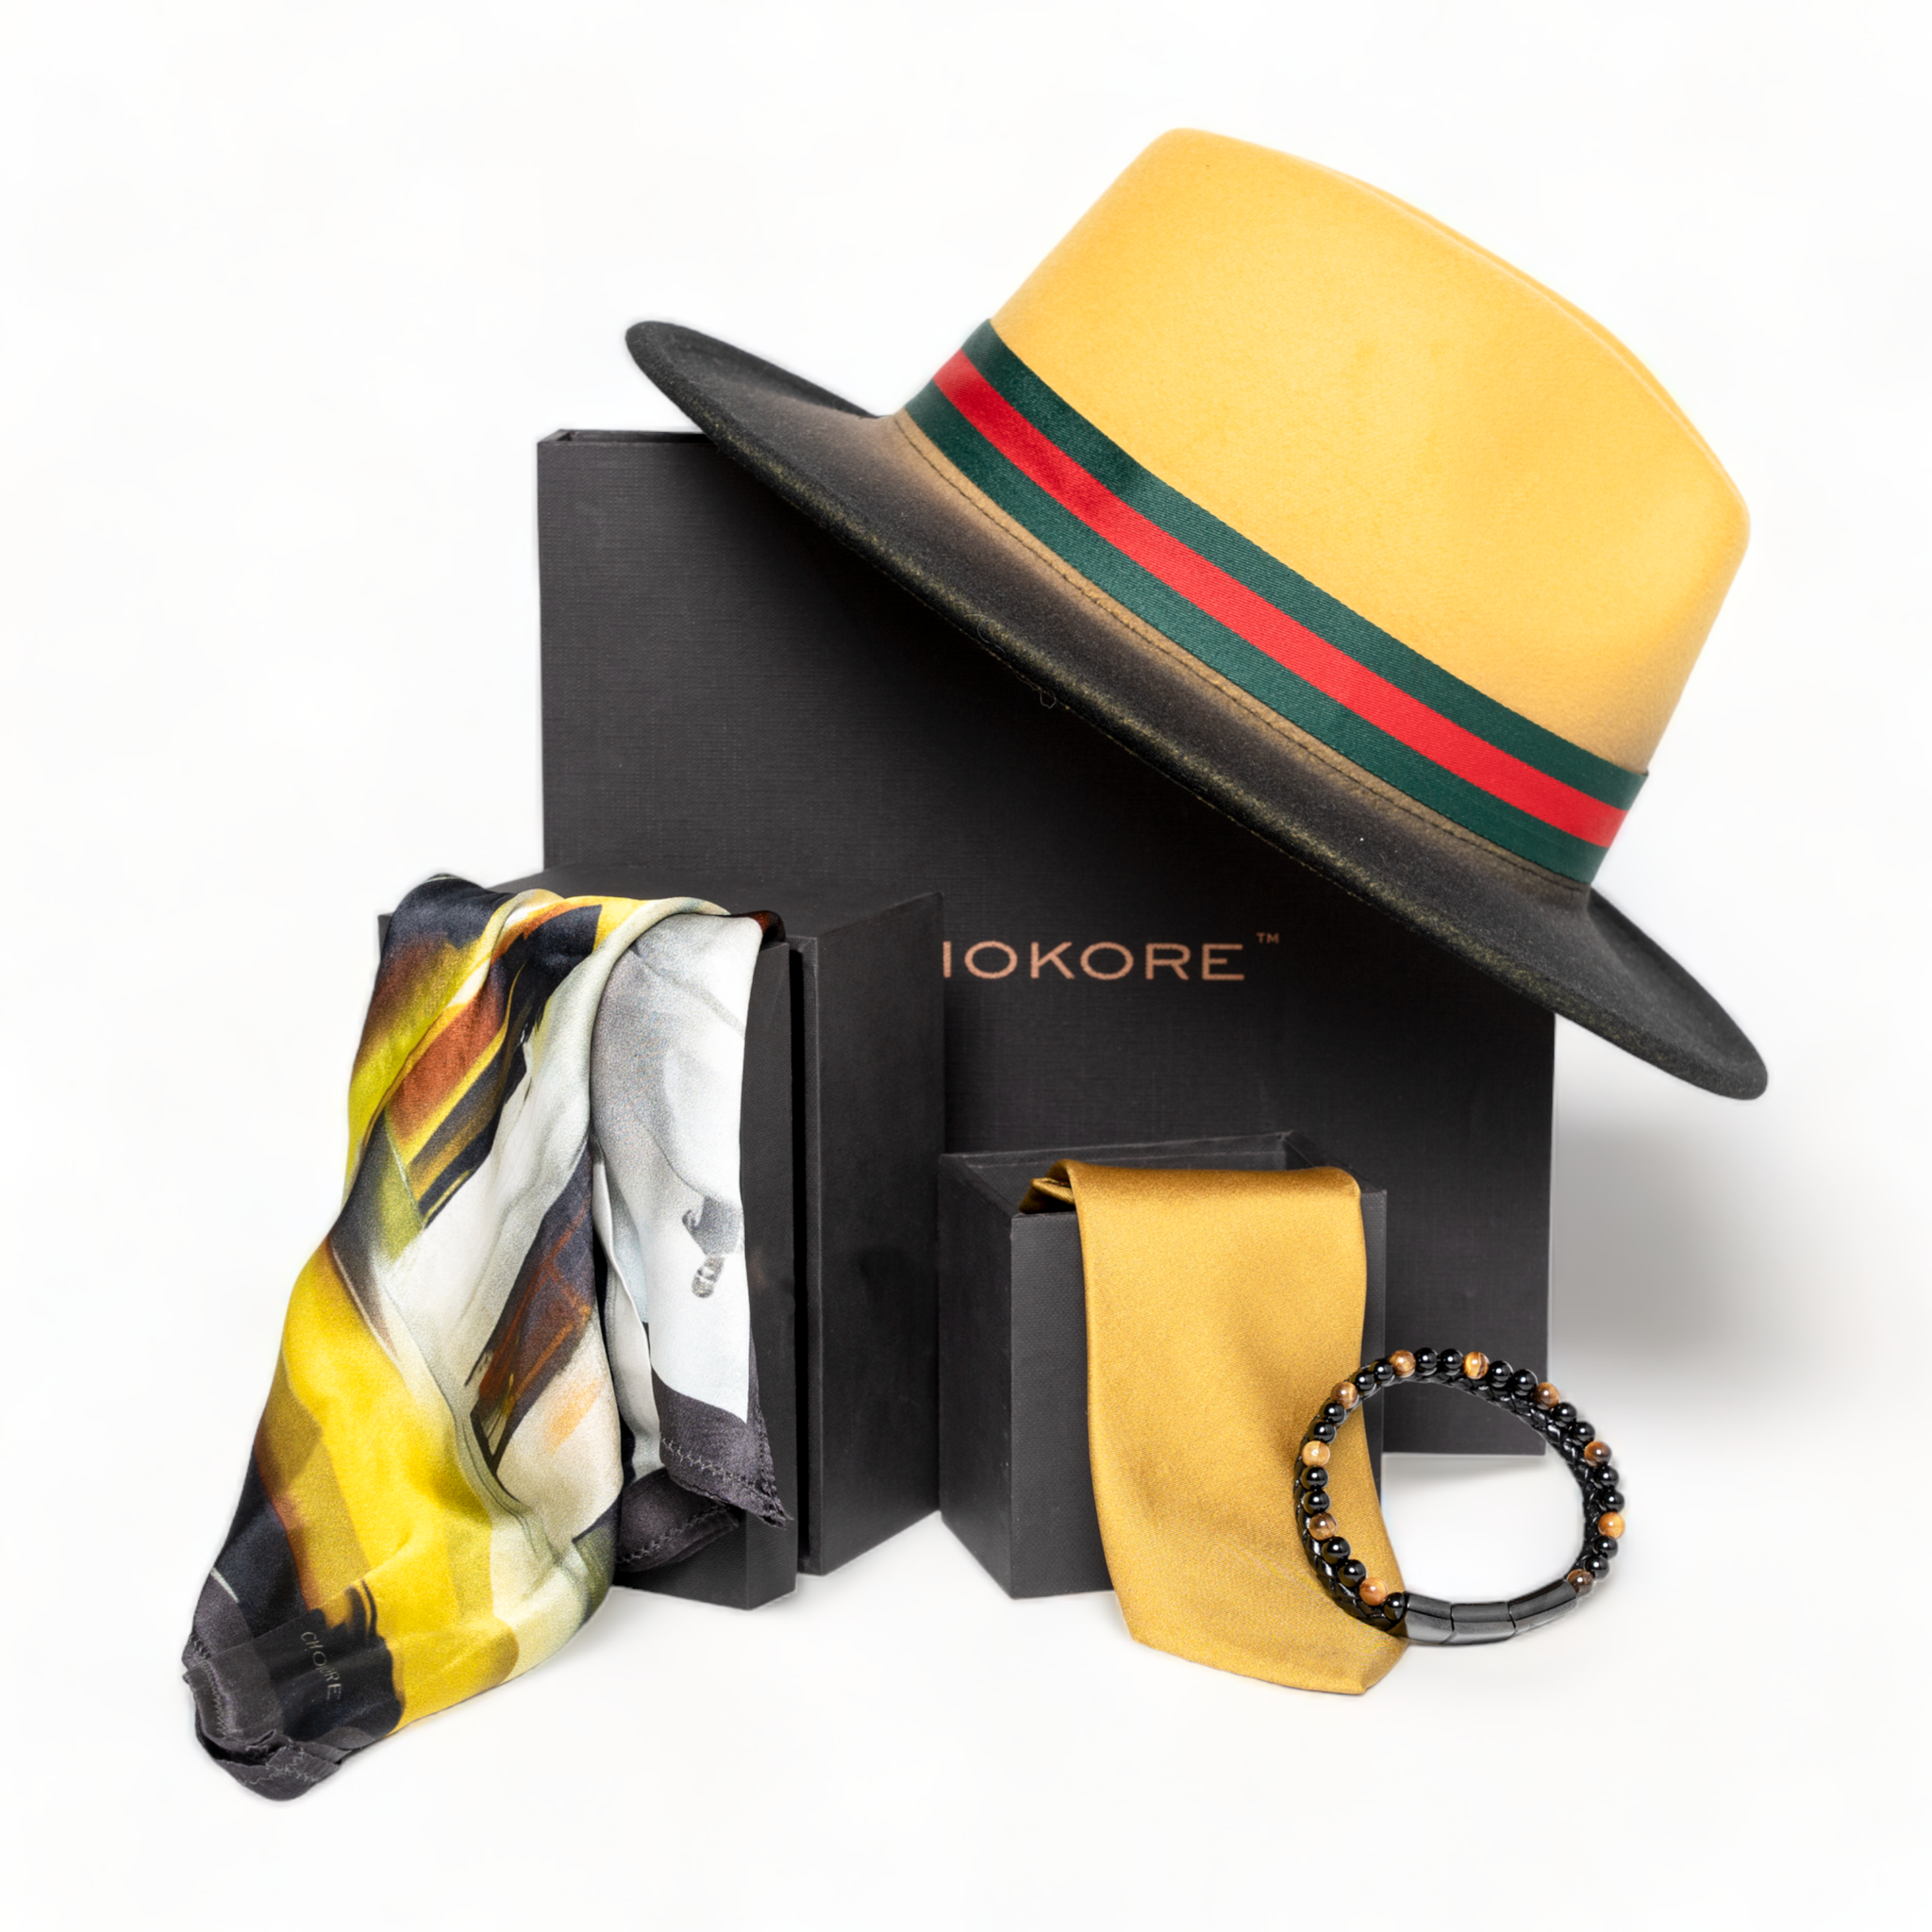 Chokore Special 4-in-1 Gift Set for Him (Chokore Arte Pocket Square, Solid Necktie, Hat, & Bracelet)